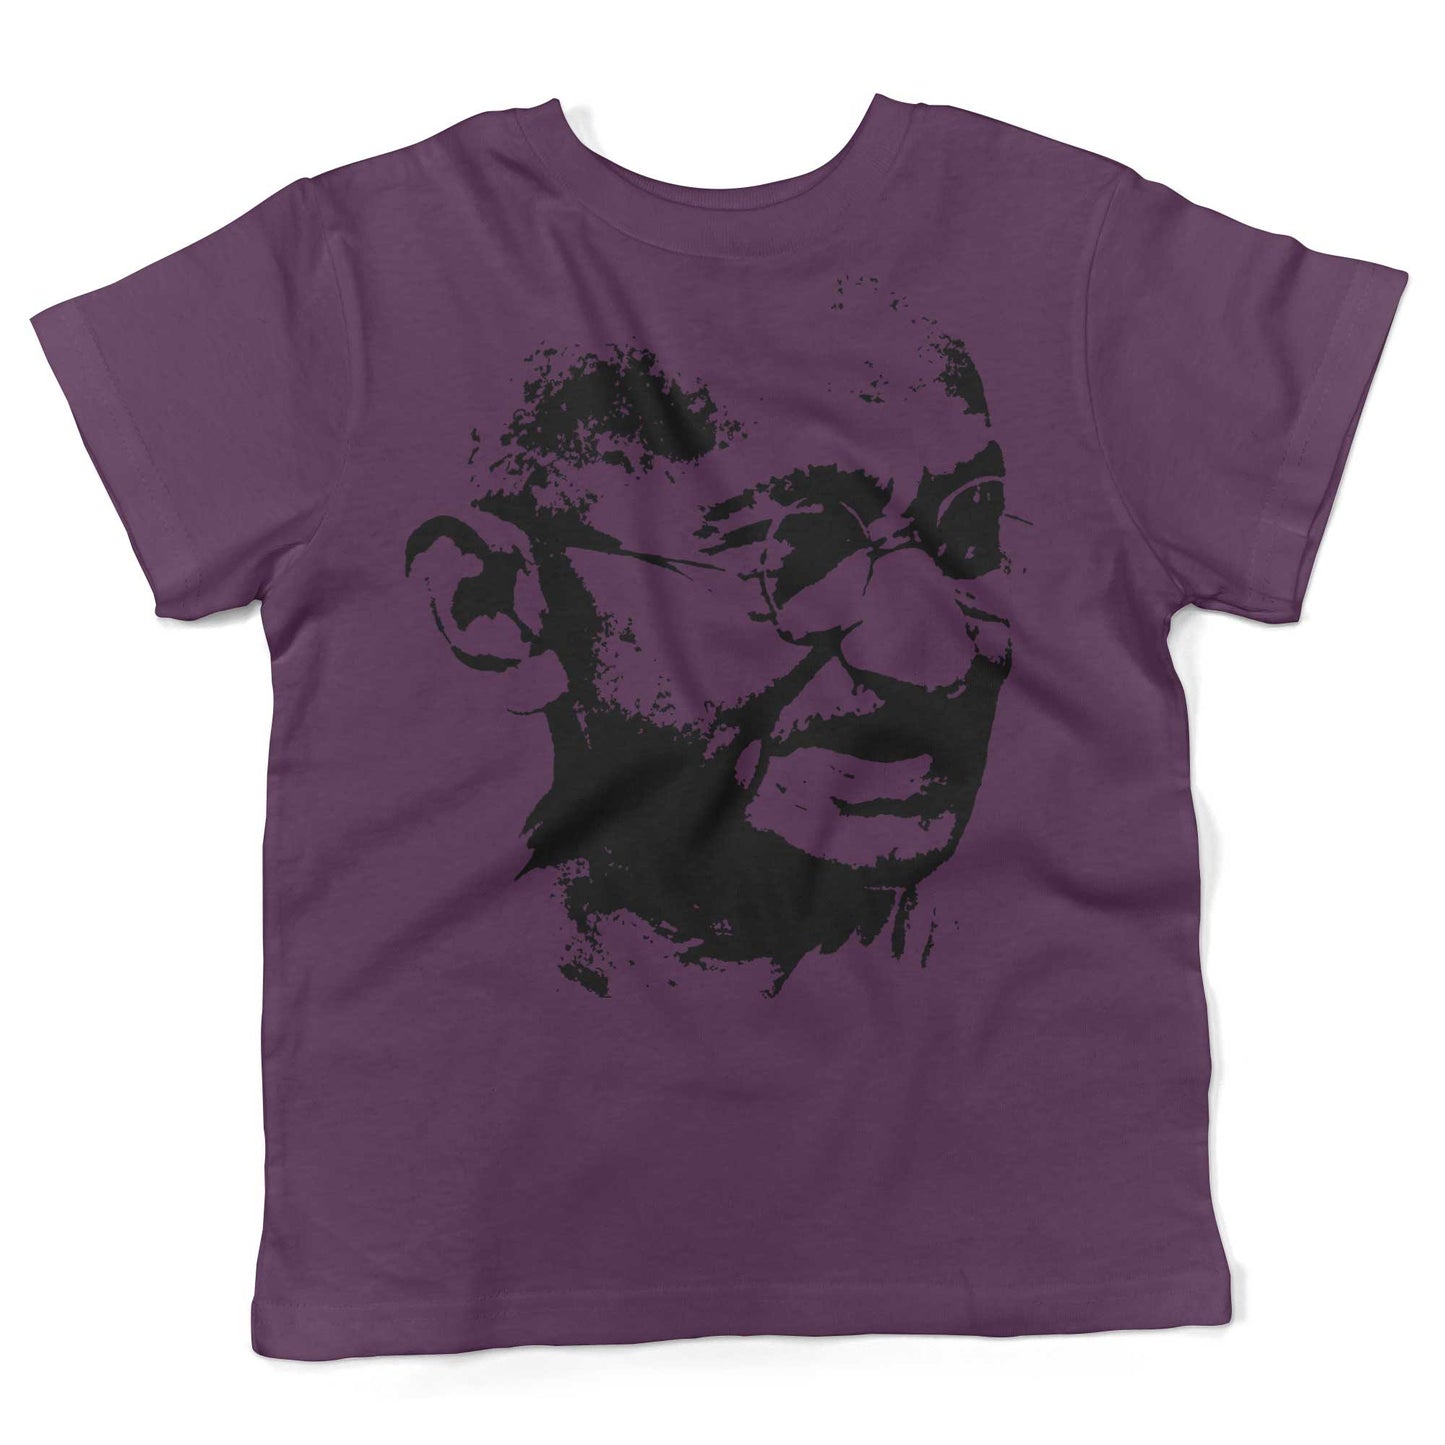 Mahatma Gandhi Be The Change Toddler Shirt-Organic Purple-2T